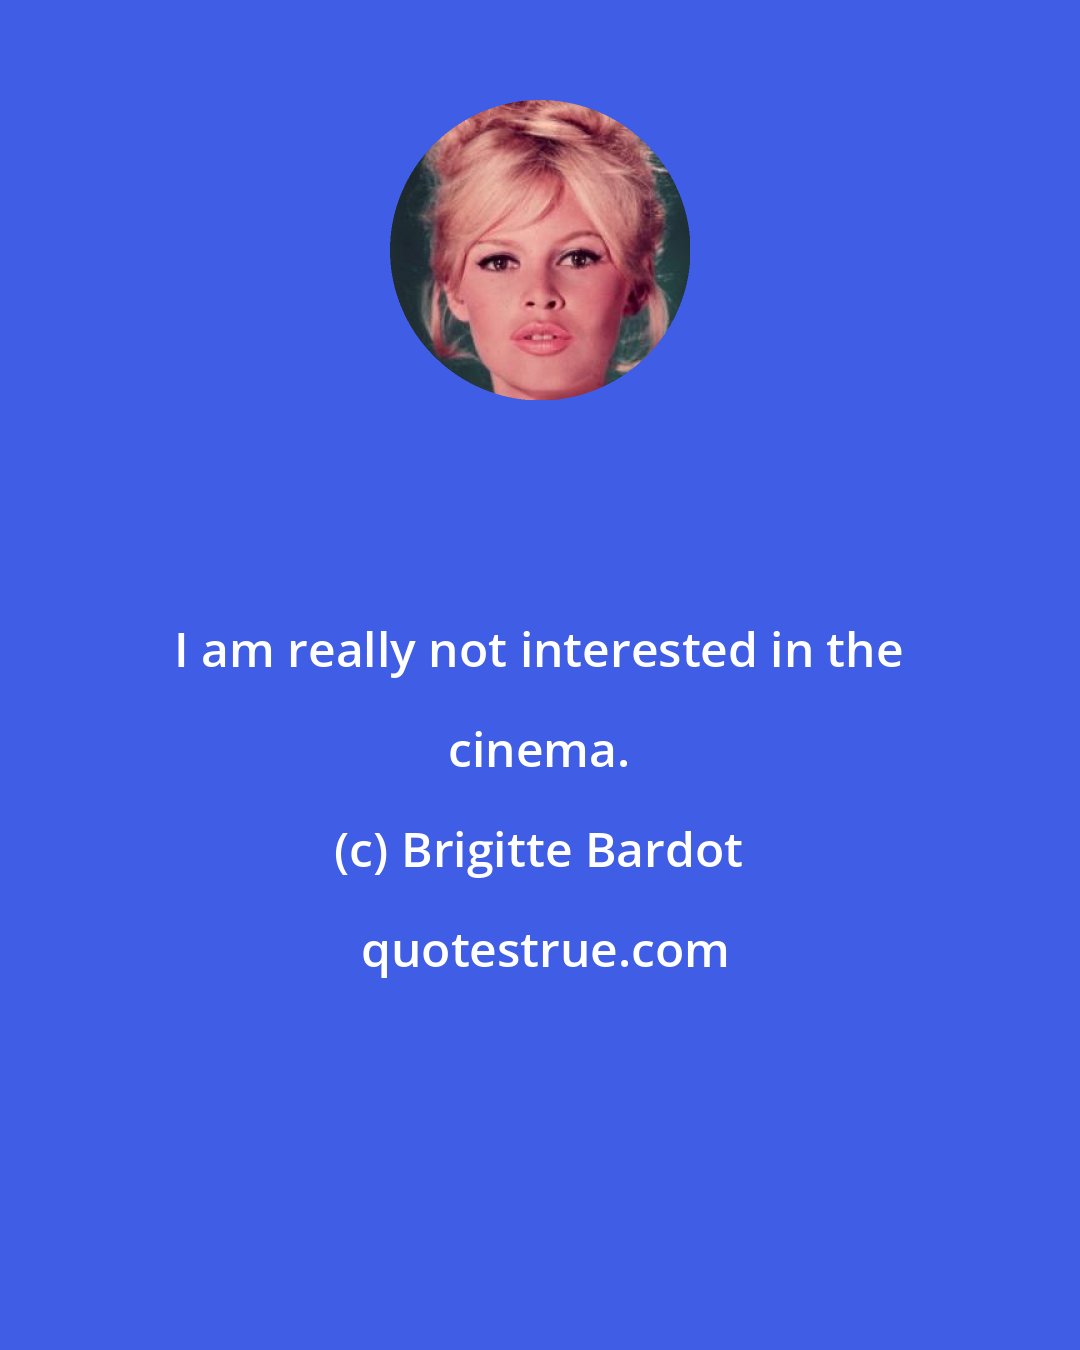 Brigitte Bardot: I am really not interested in the cinema.